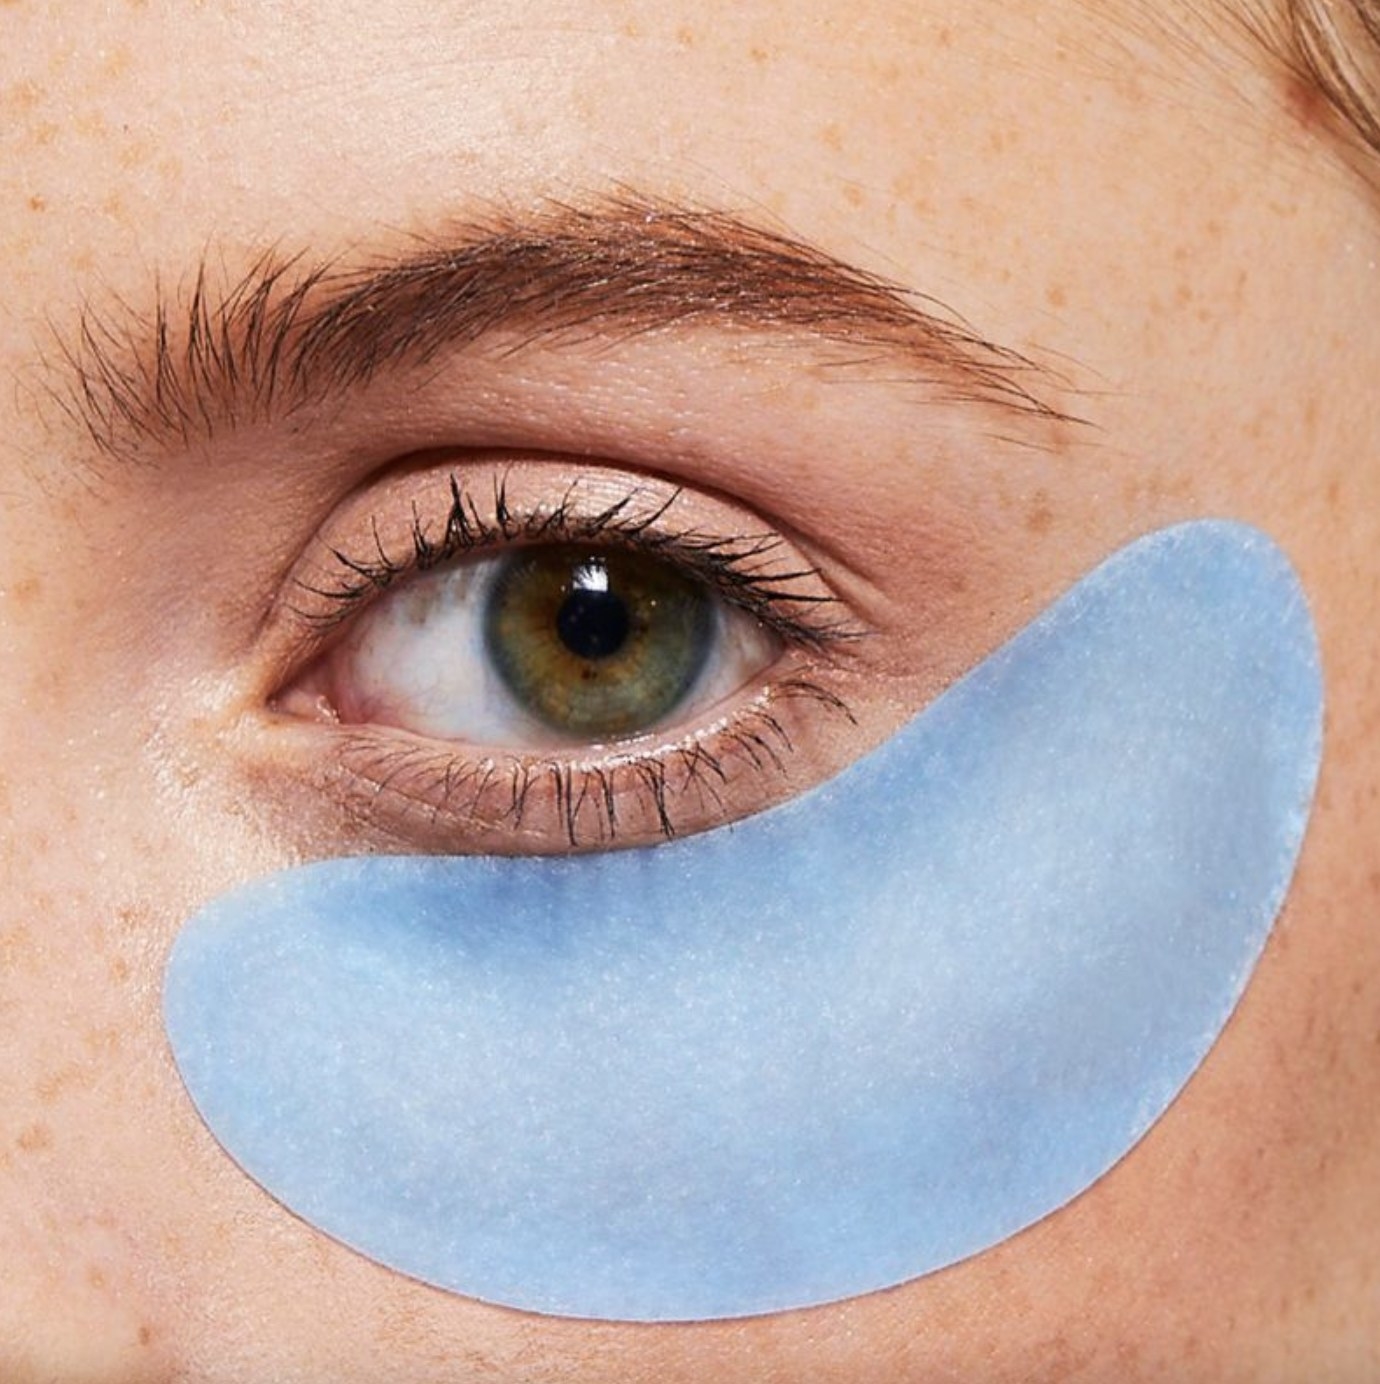 A person wearing a blue eye mask